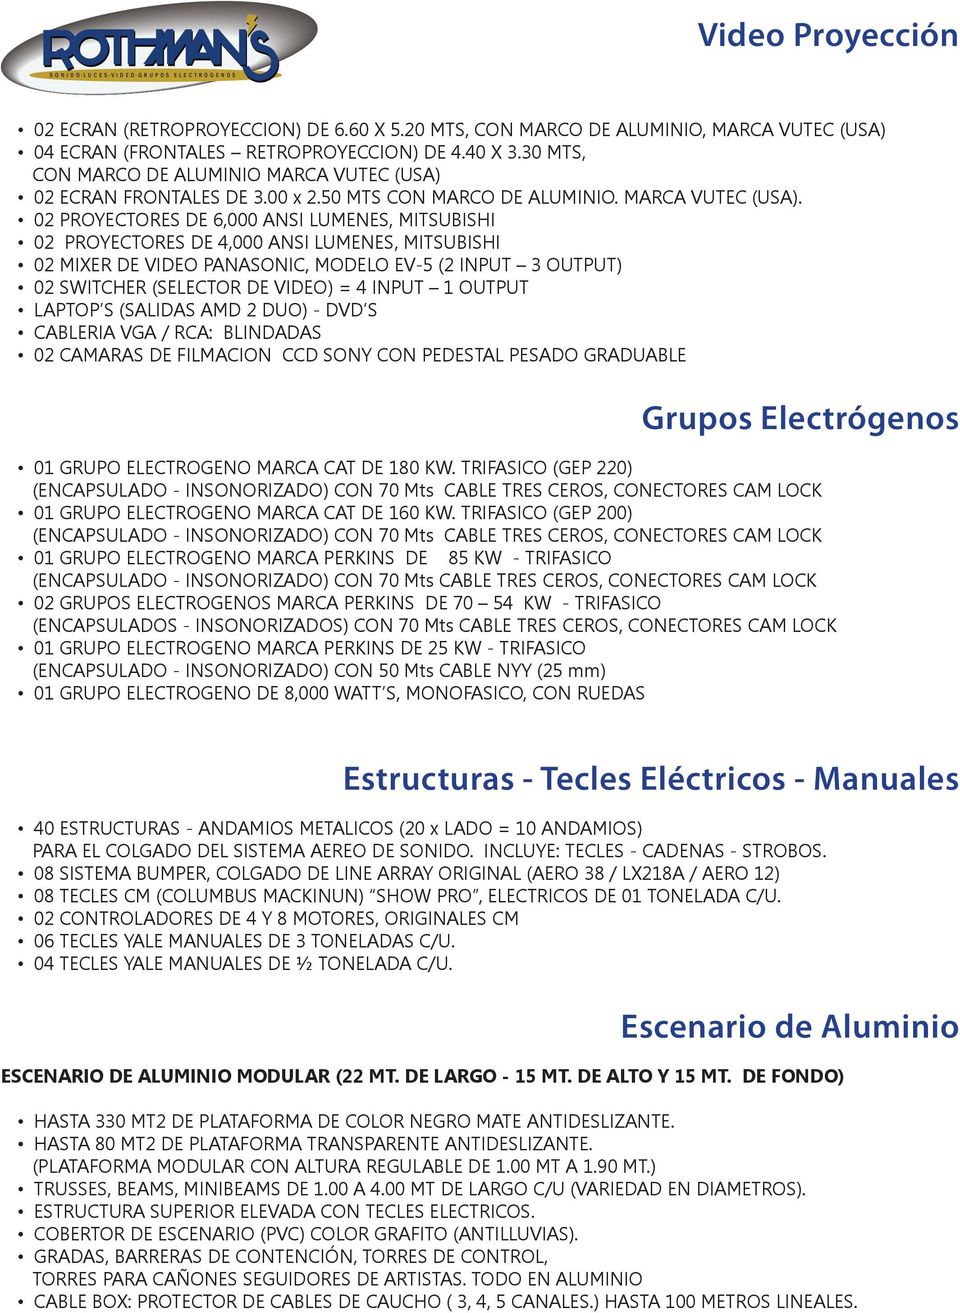 02 ECRAN FRONTALES DE 3.00 x 2.50 MTS CON MARCO DE ALUMINIO. MARCA VUTEC (USA).